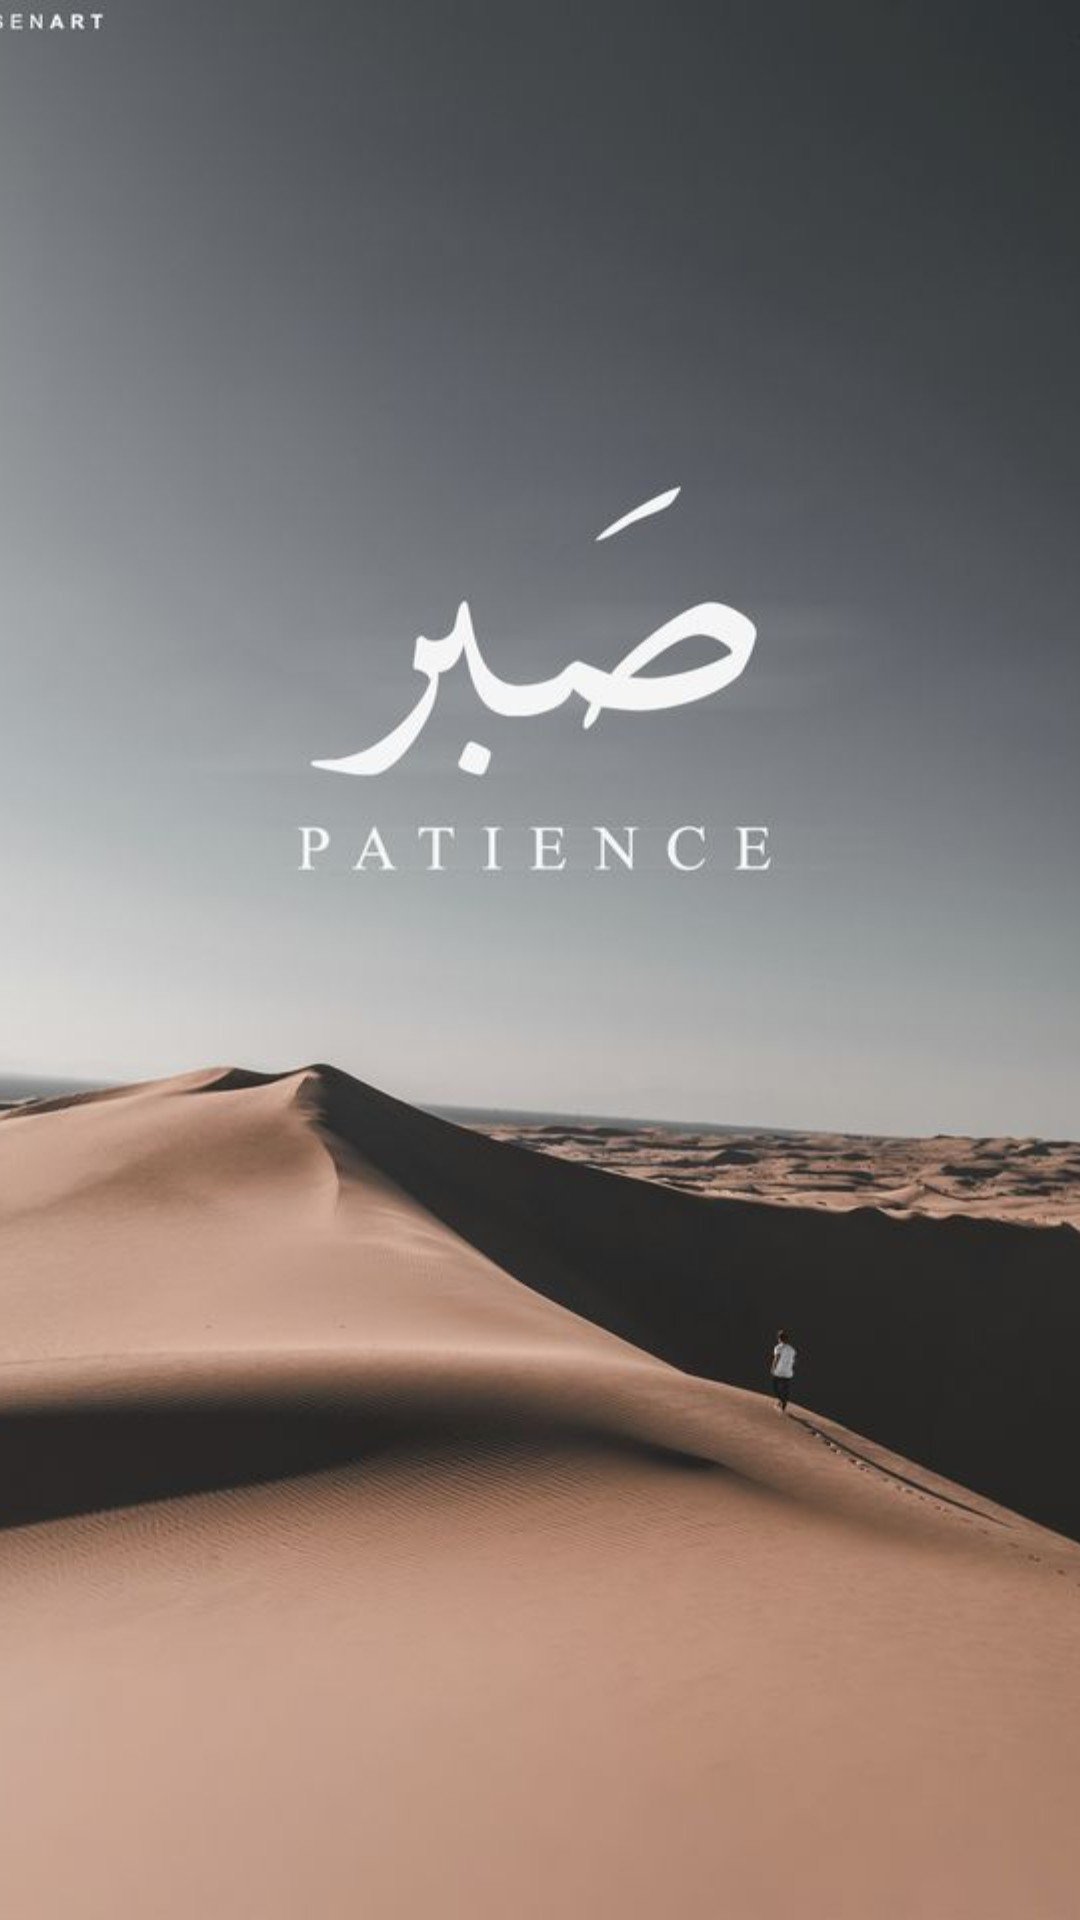 Sabr (patience) [2560 X 1600] : r/wallpaper